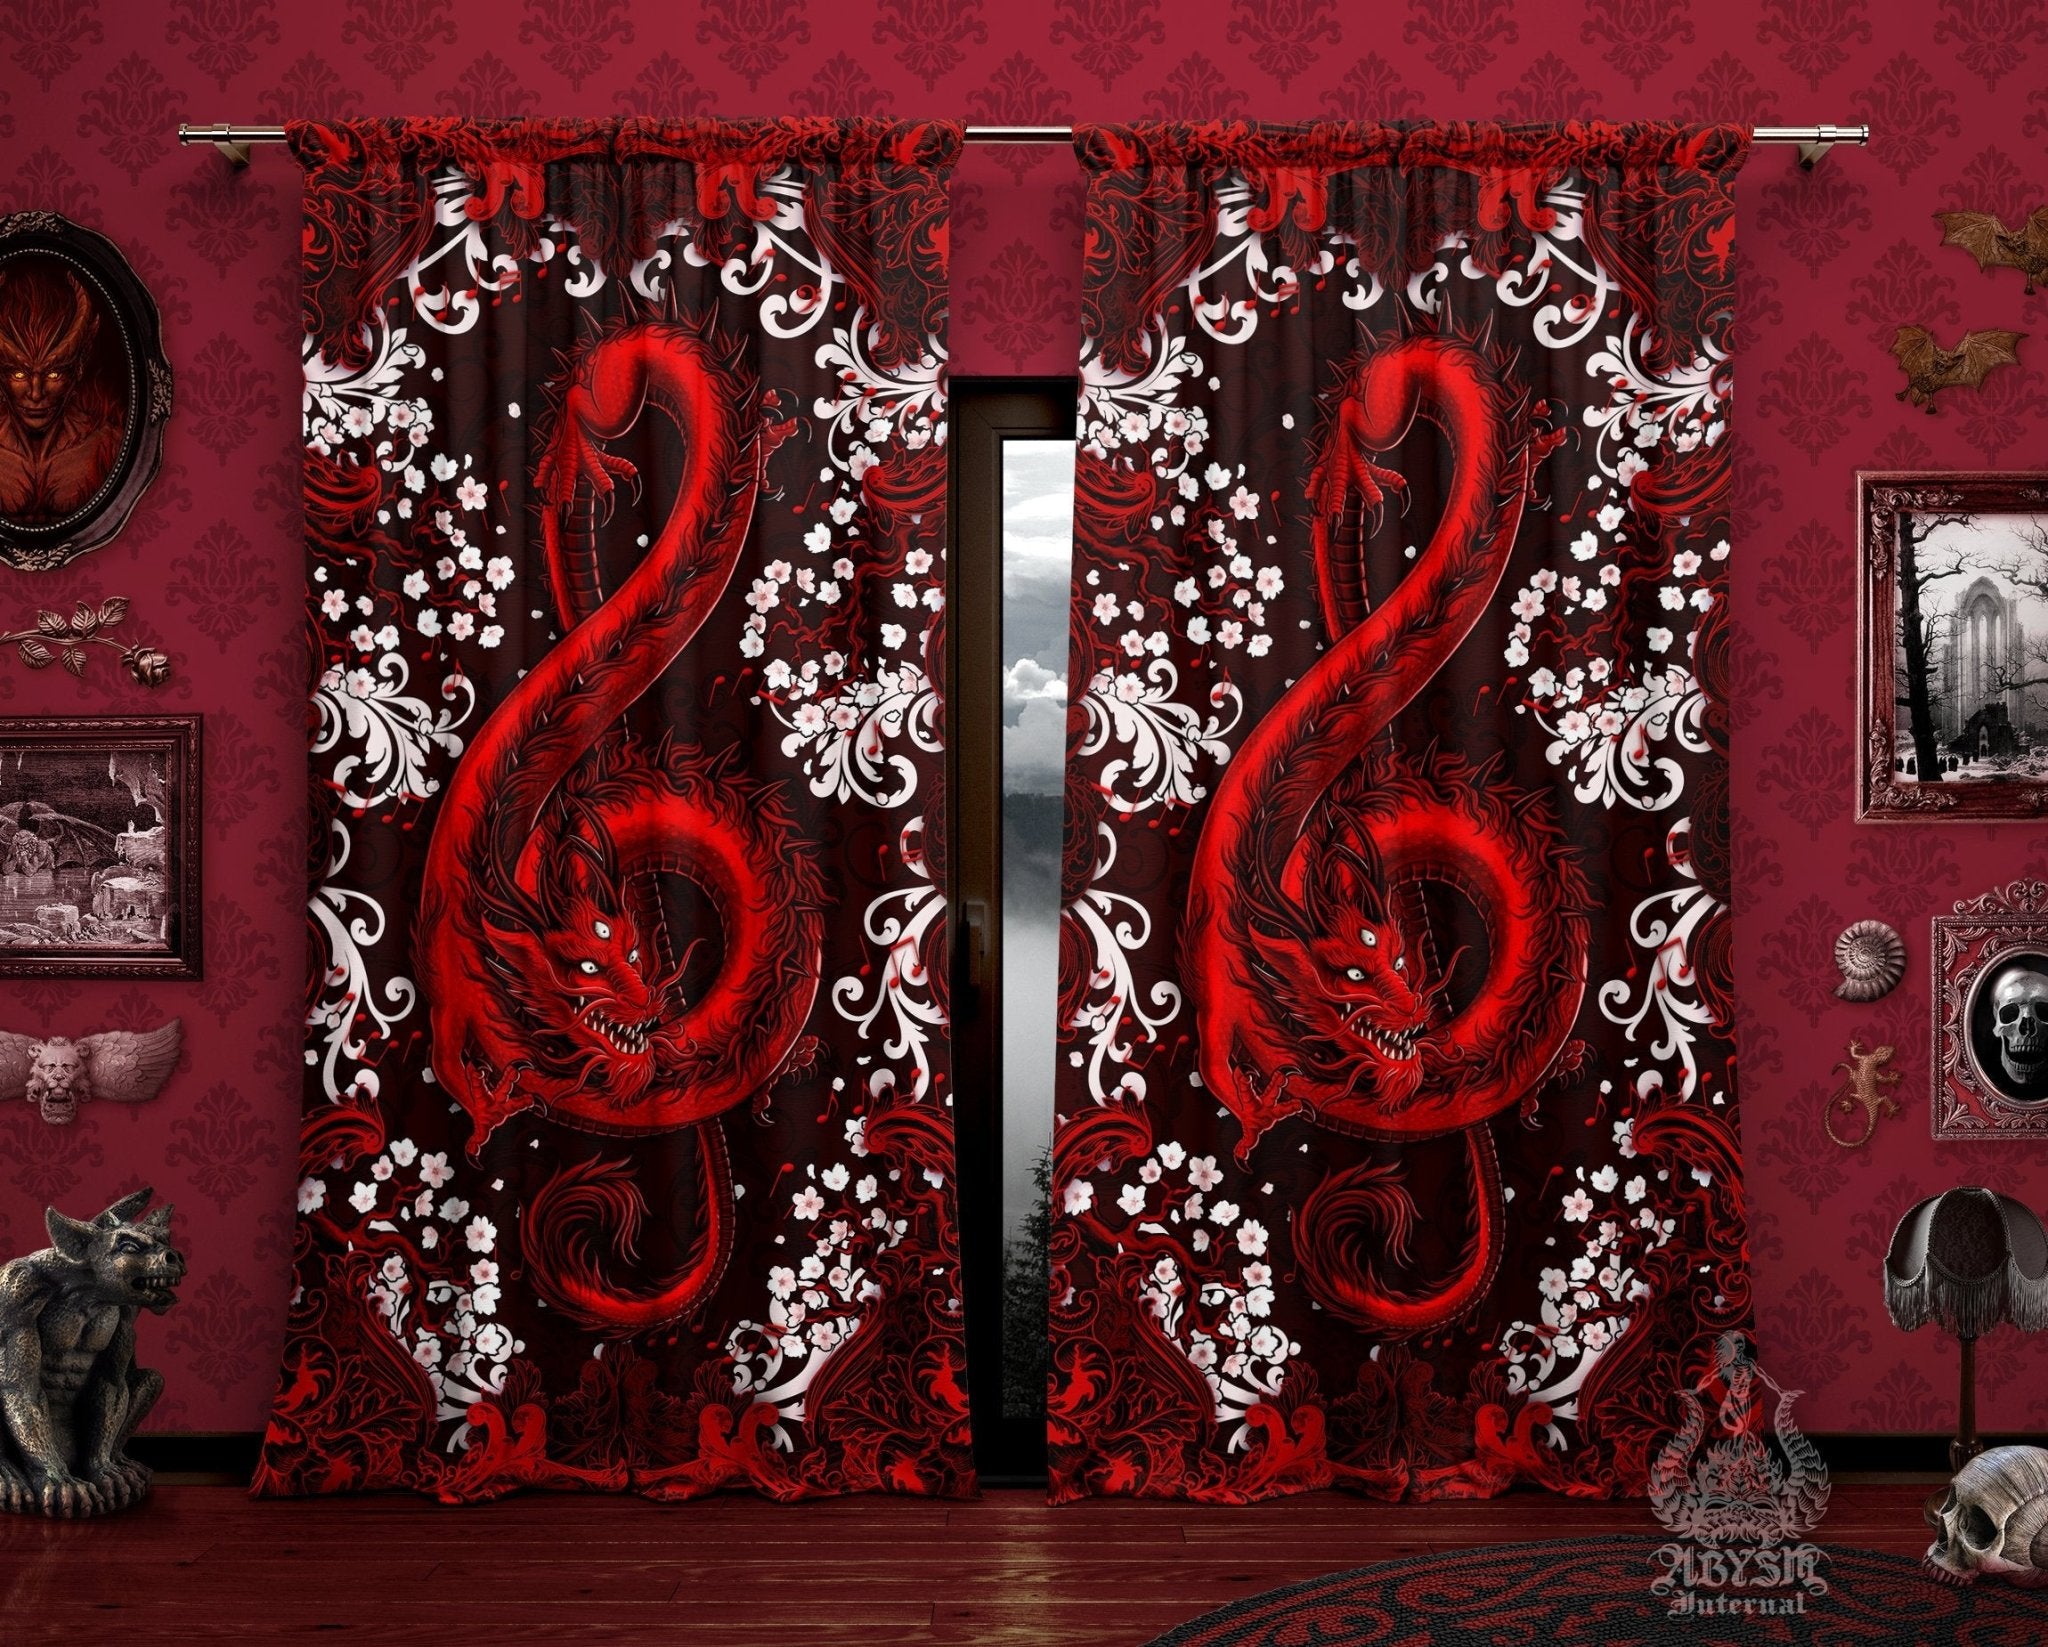 Red Dragon Blackout Curtains, Long Window Panels, Treble Clef, Music Art Print, Gothic Home Decor - Bloody Goth, Black - Abysm Internal